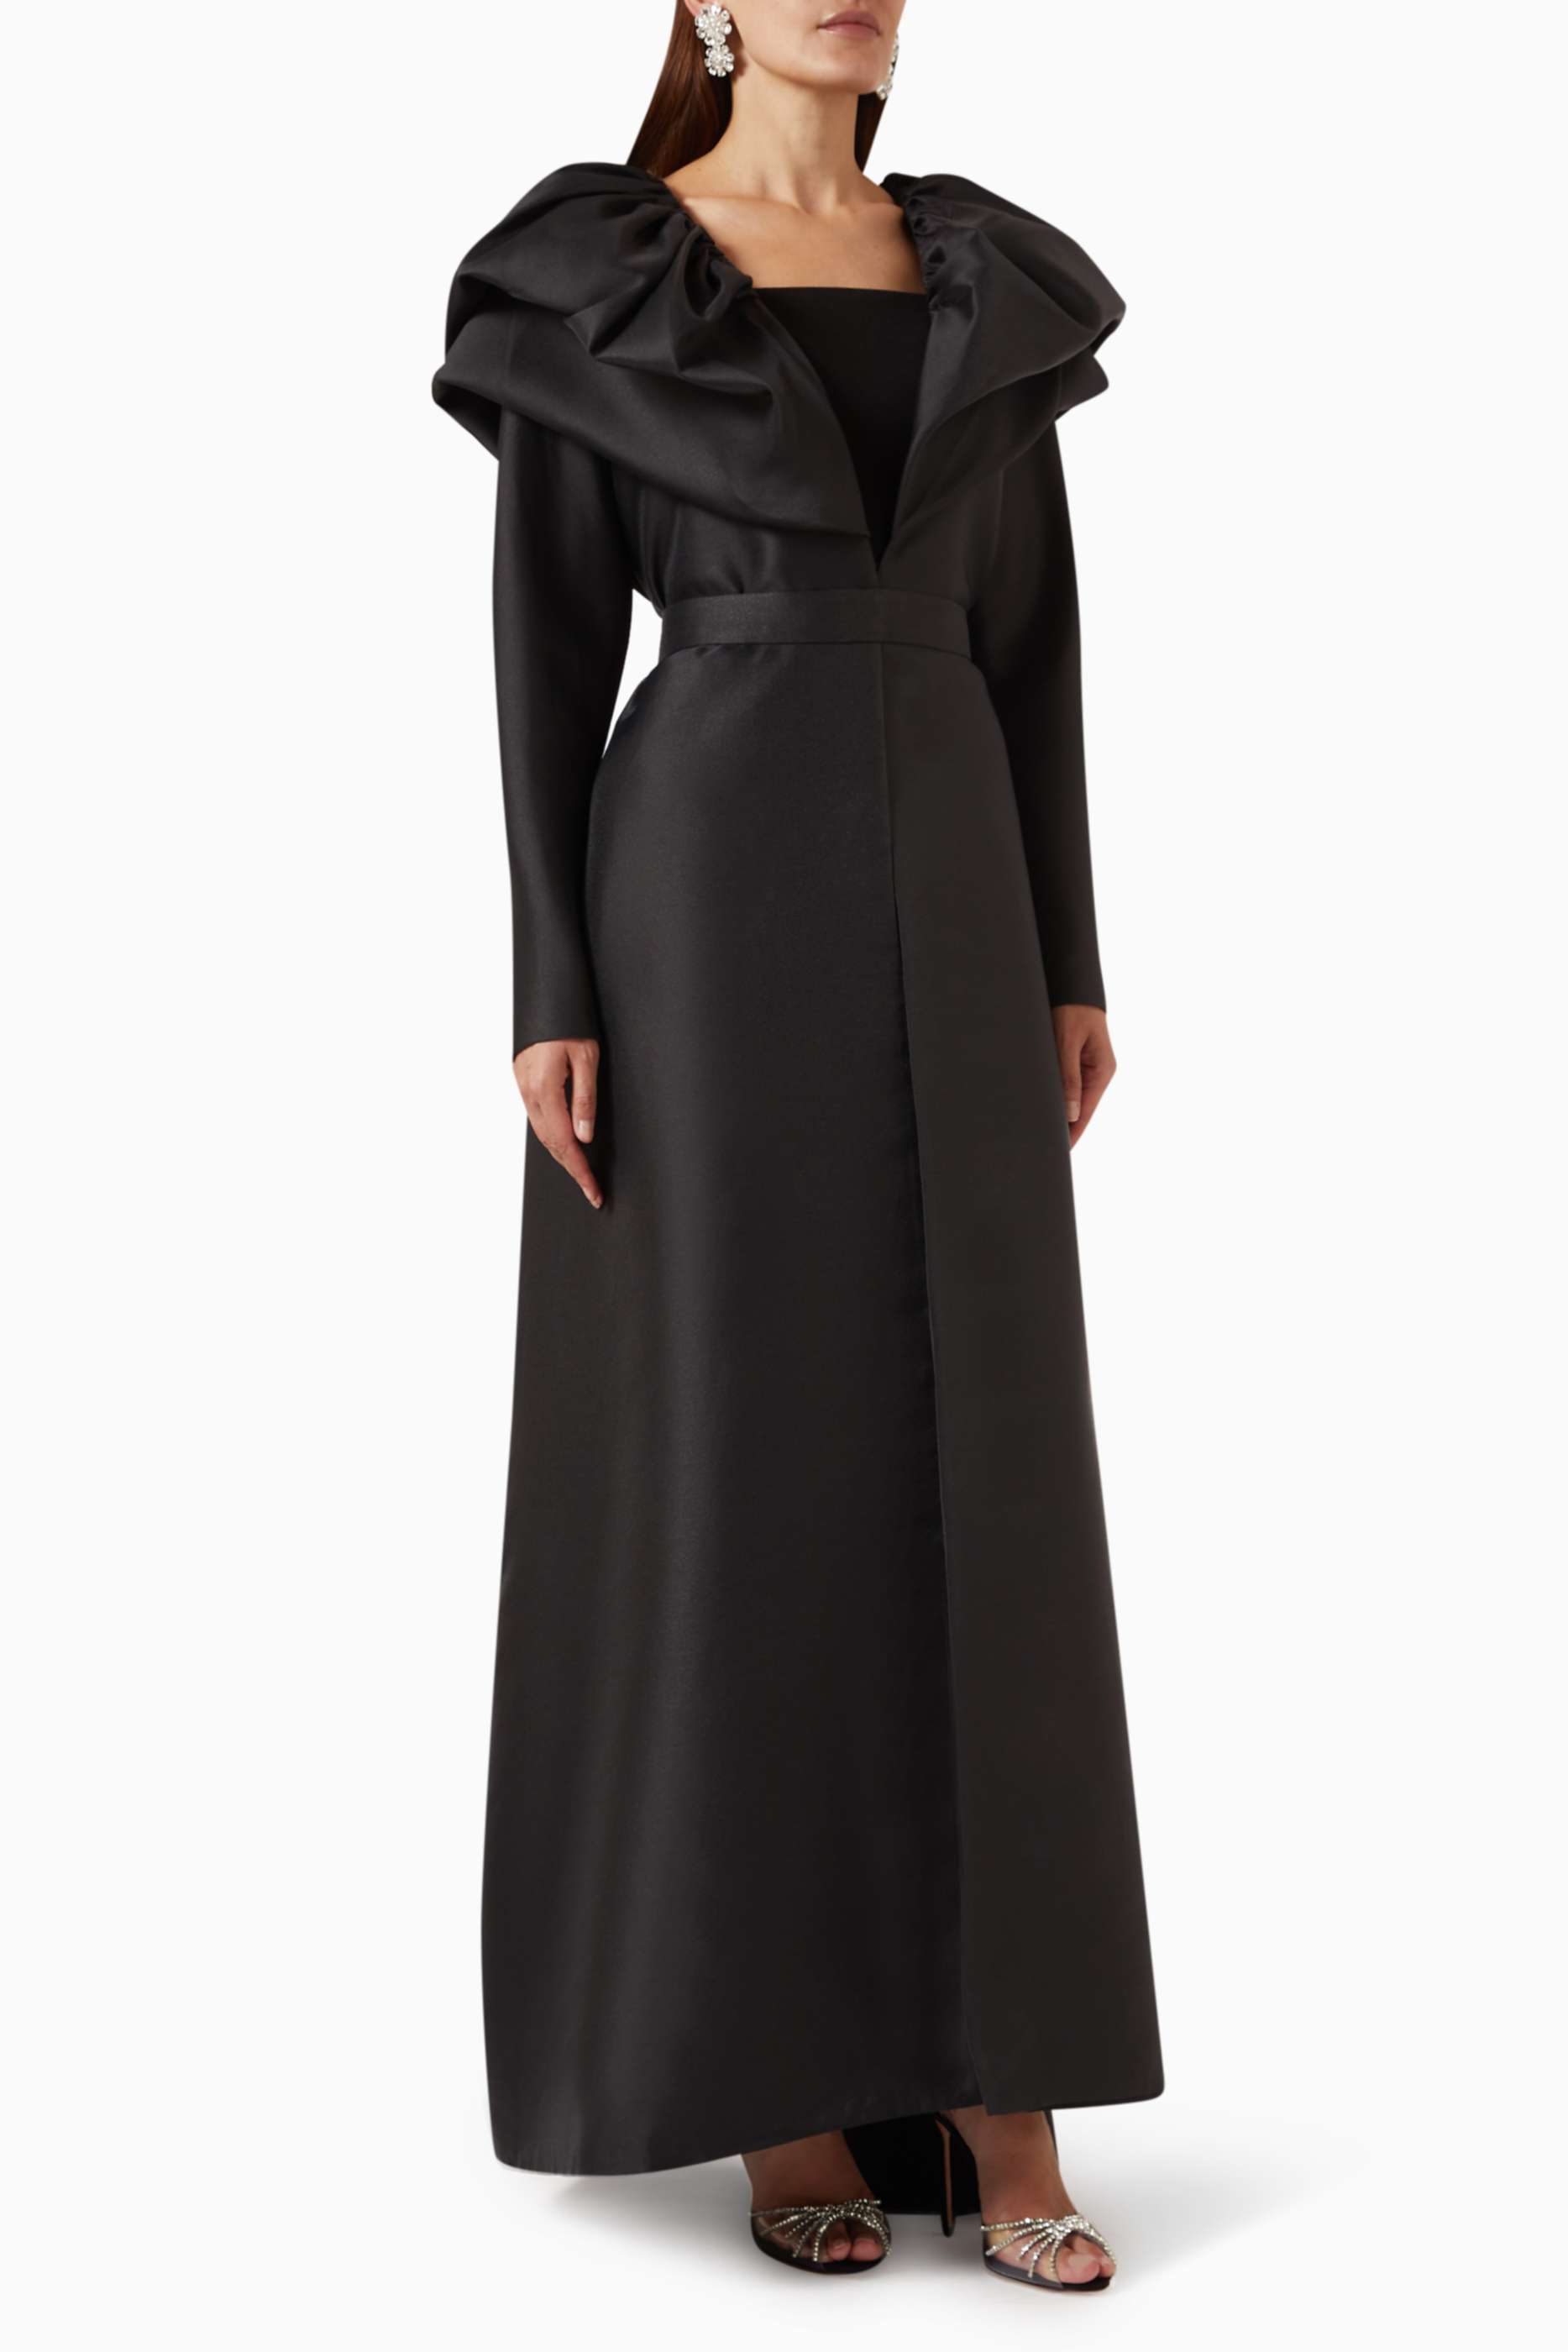 shop-velvety-couture-talya-jumpsuit-cape-set-in-scuba-taffeta-blend-for-women